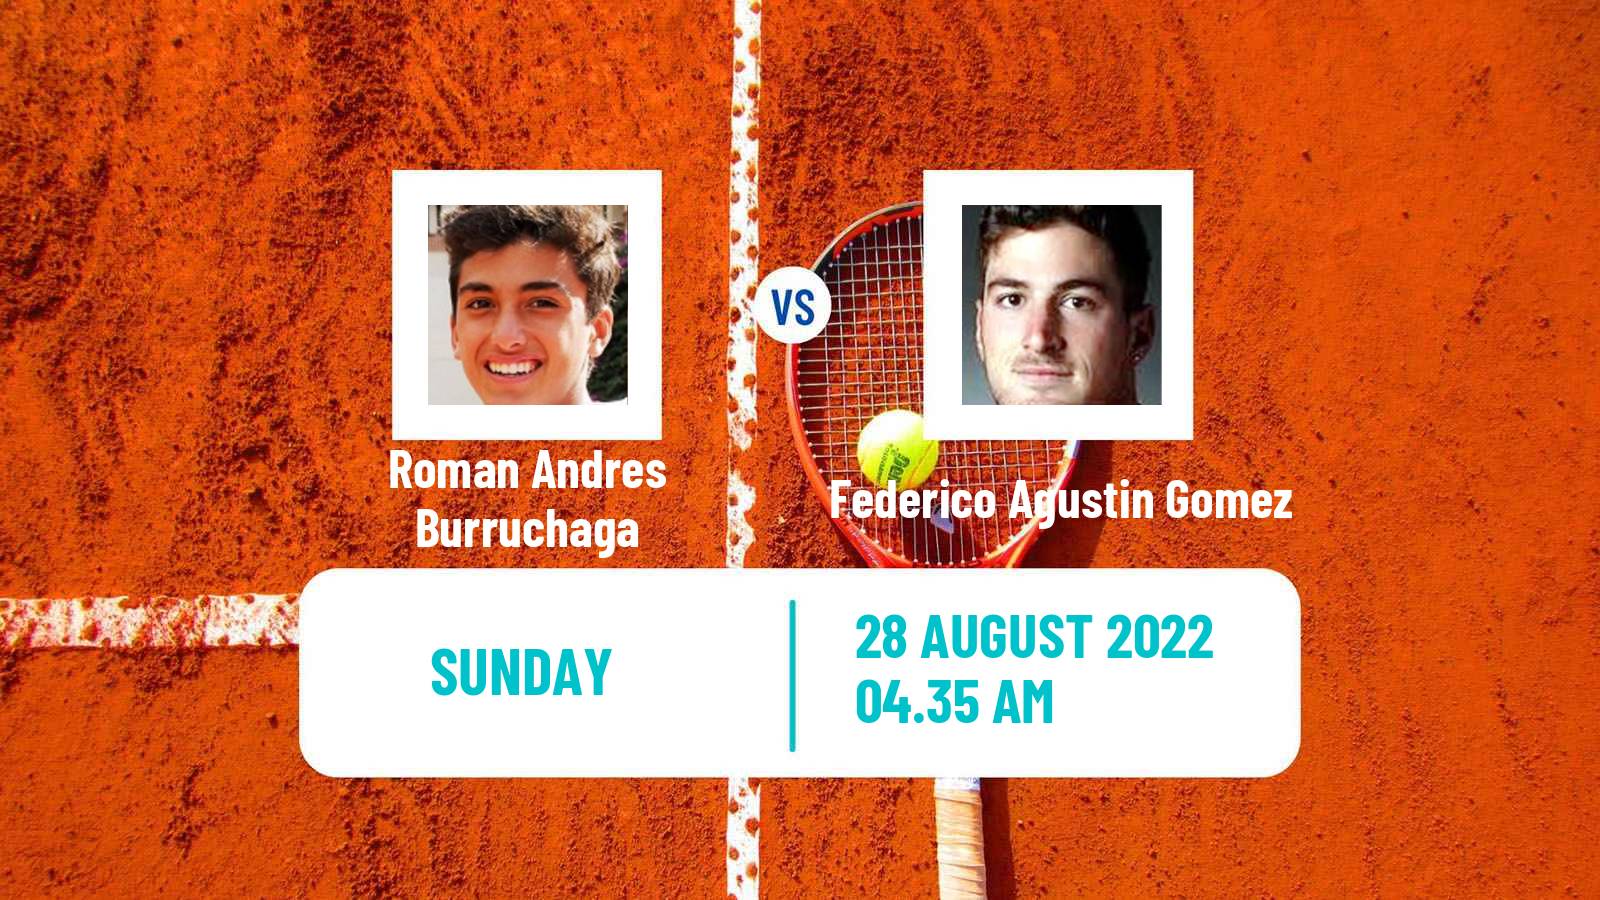 Tennis ATP Challenger Roman Andres Burruchaga - Federico Agustin Gomez